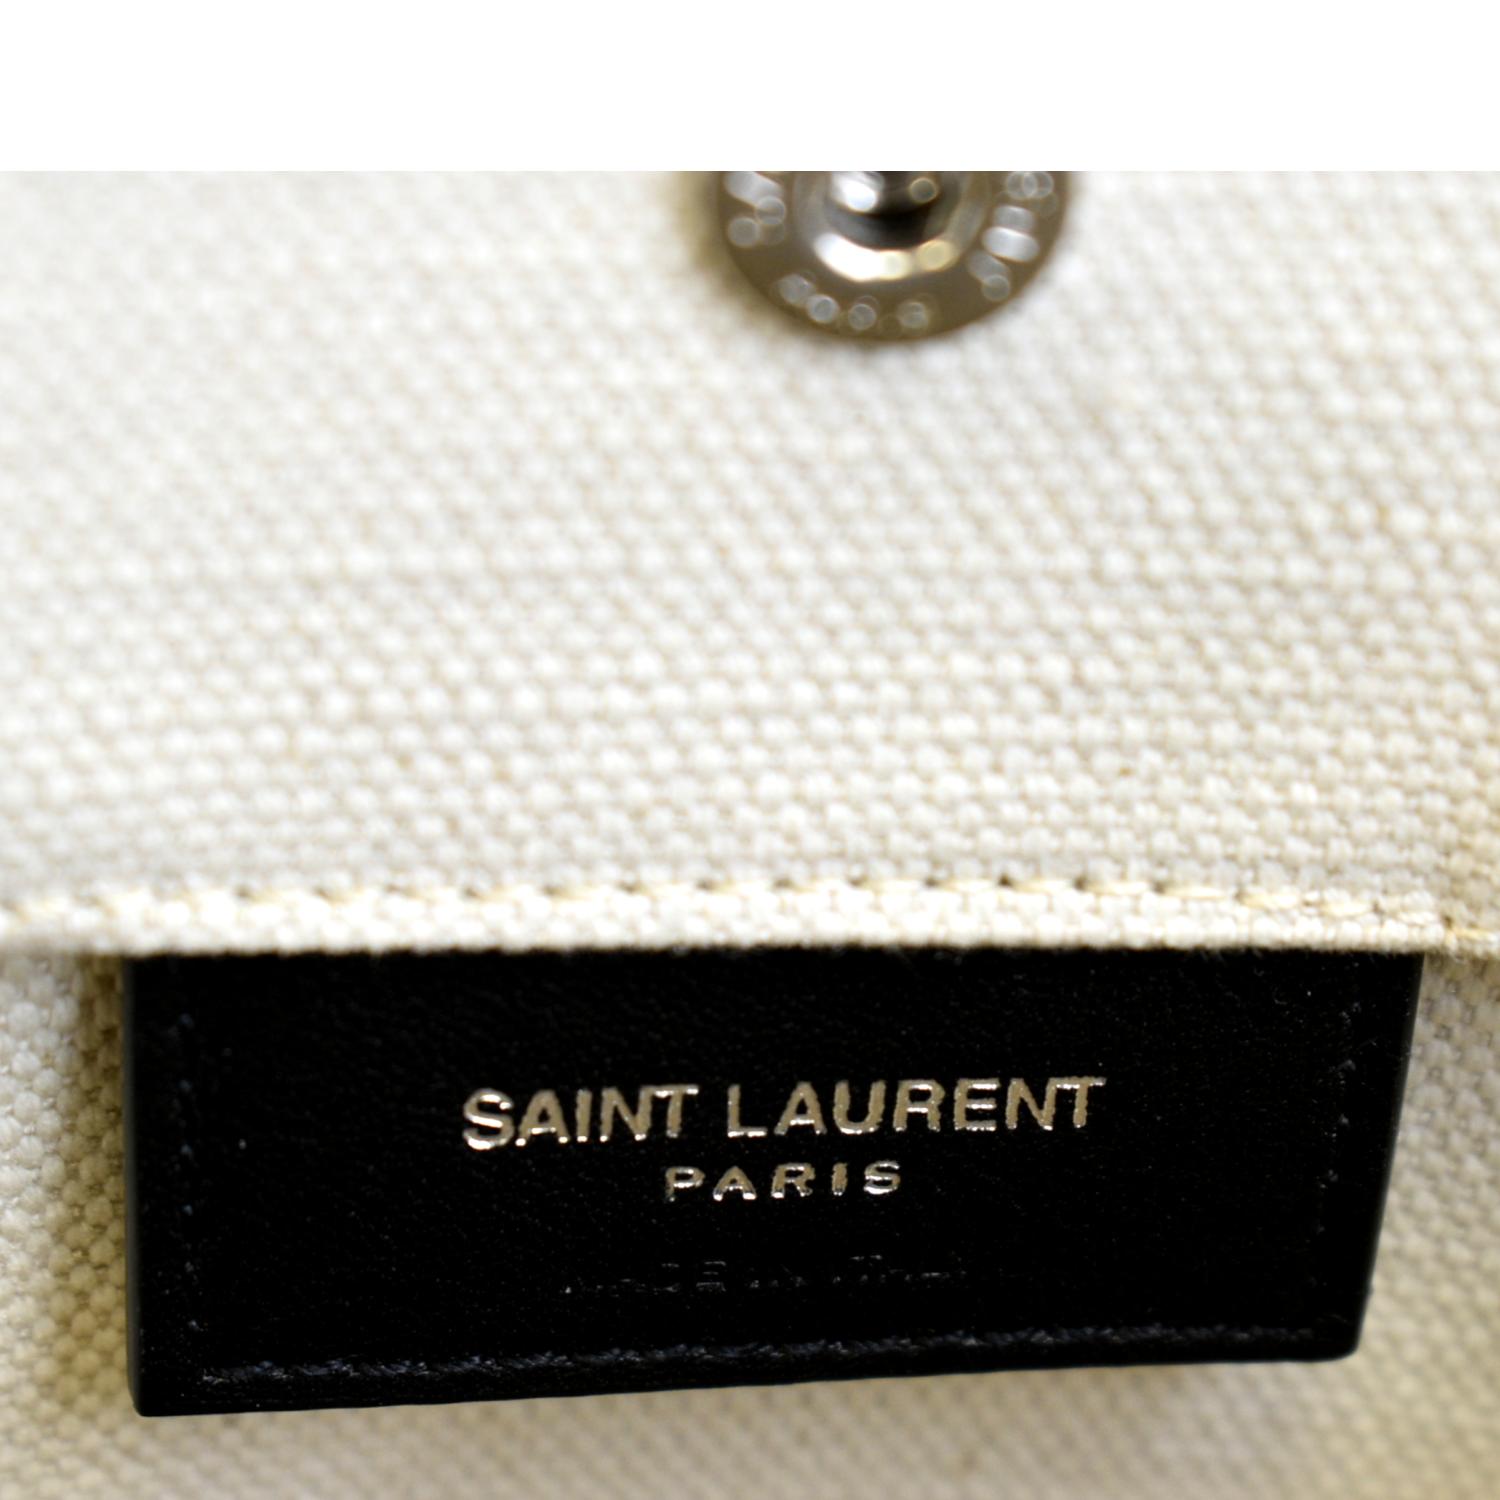 SAINT LAURENT PARIS Classic Toile Monogram clutch / cosmetic bag